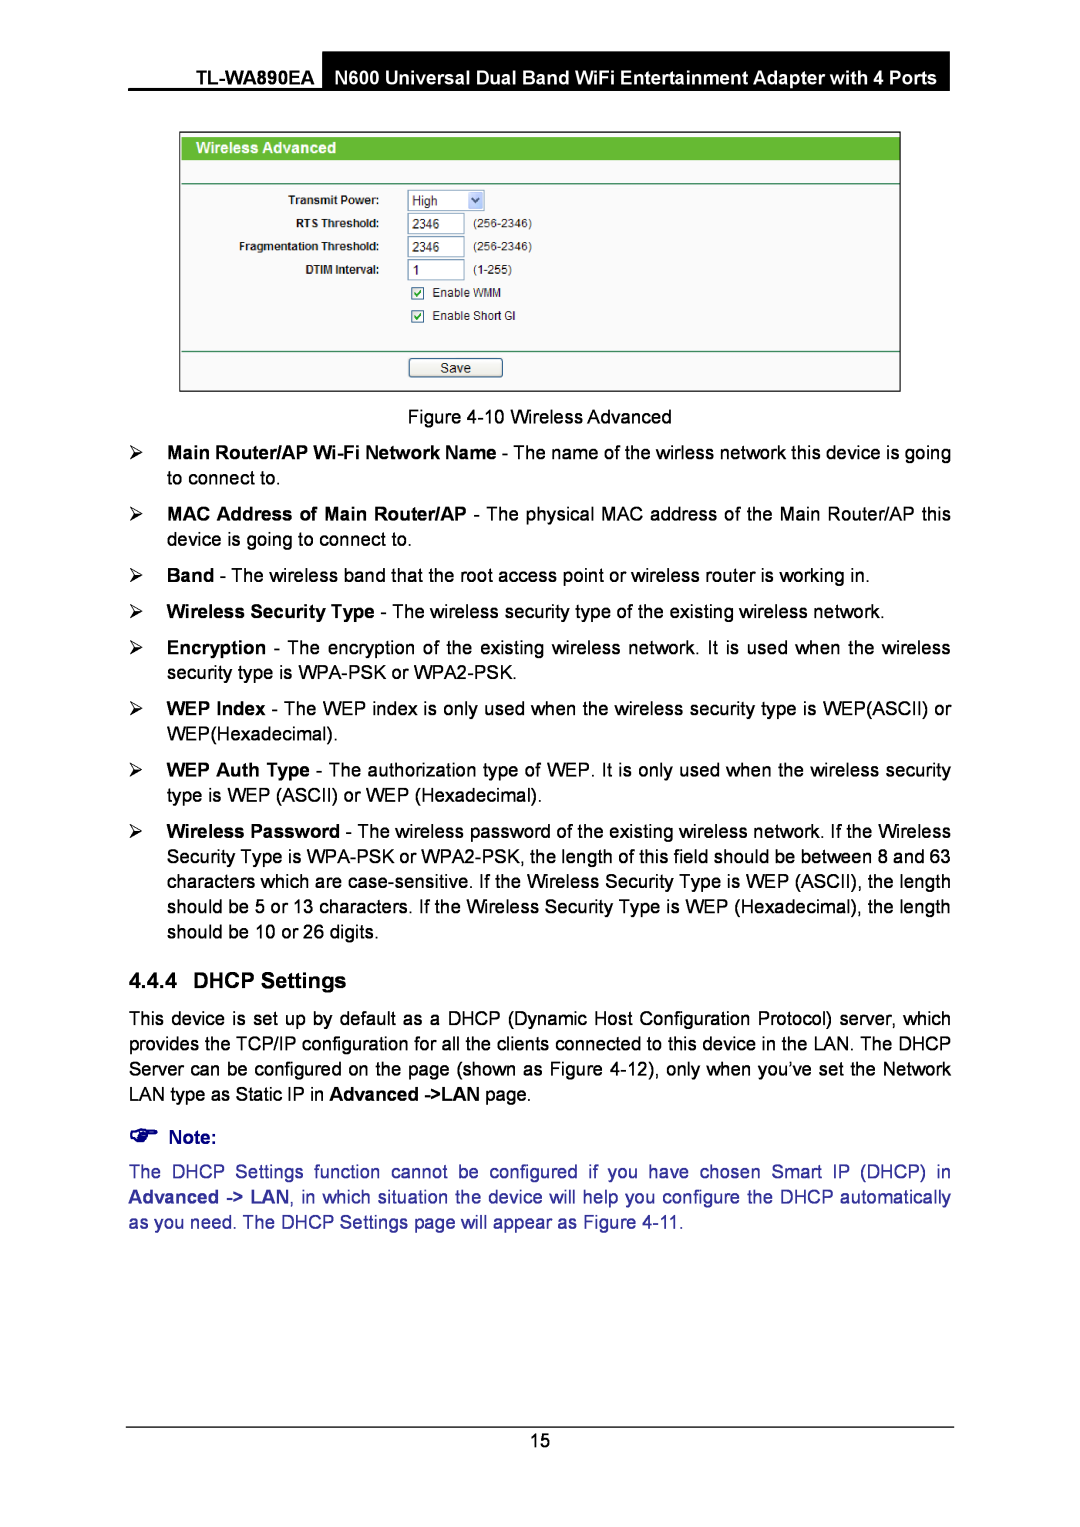 TP-Link WA-890EA manual DHCP Settings,  Note 